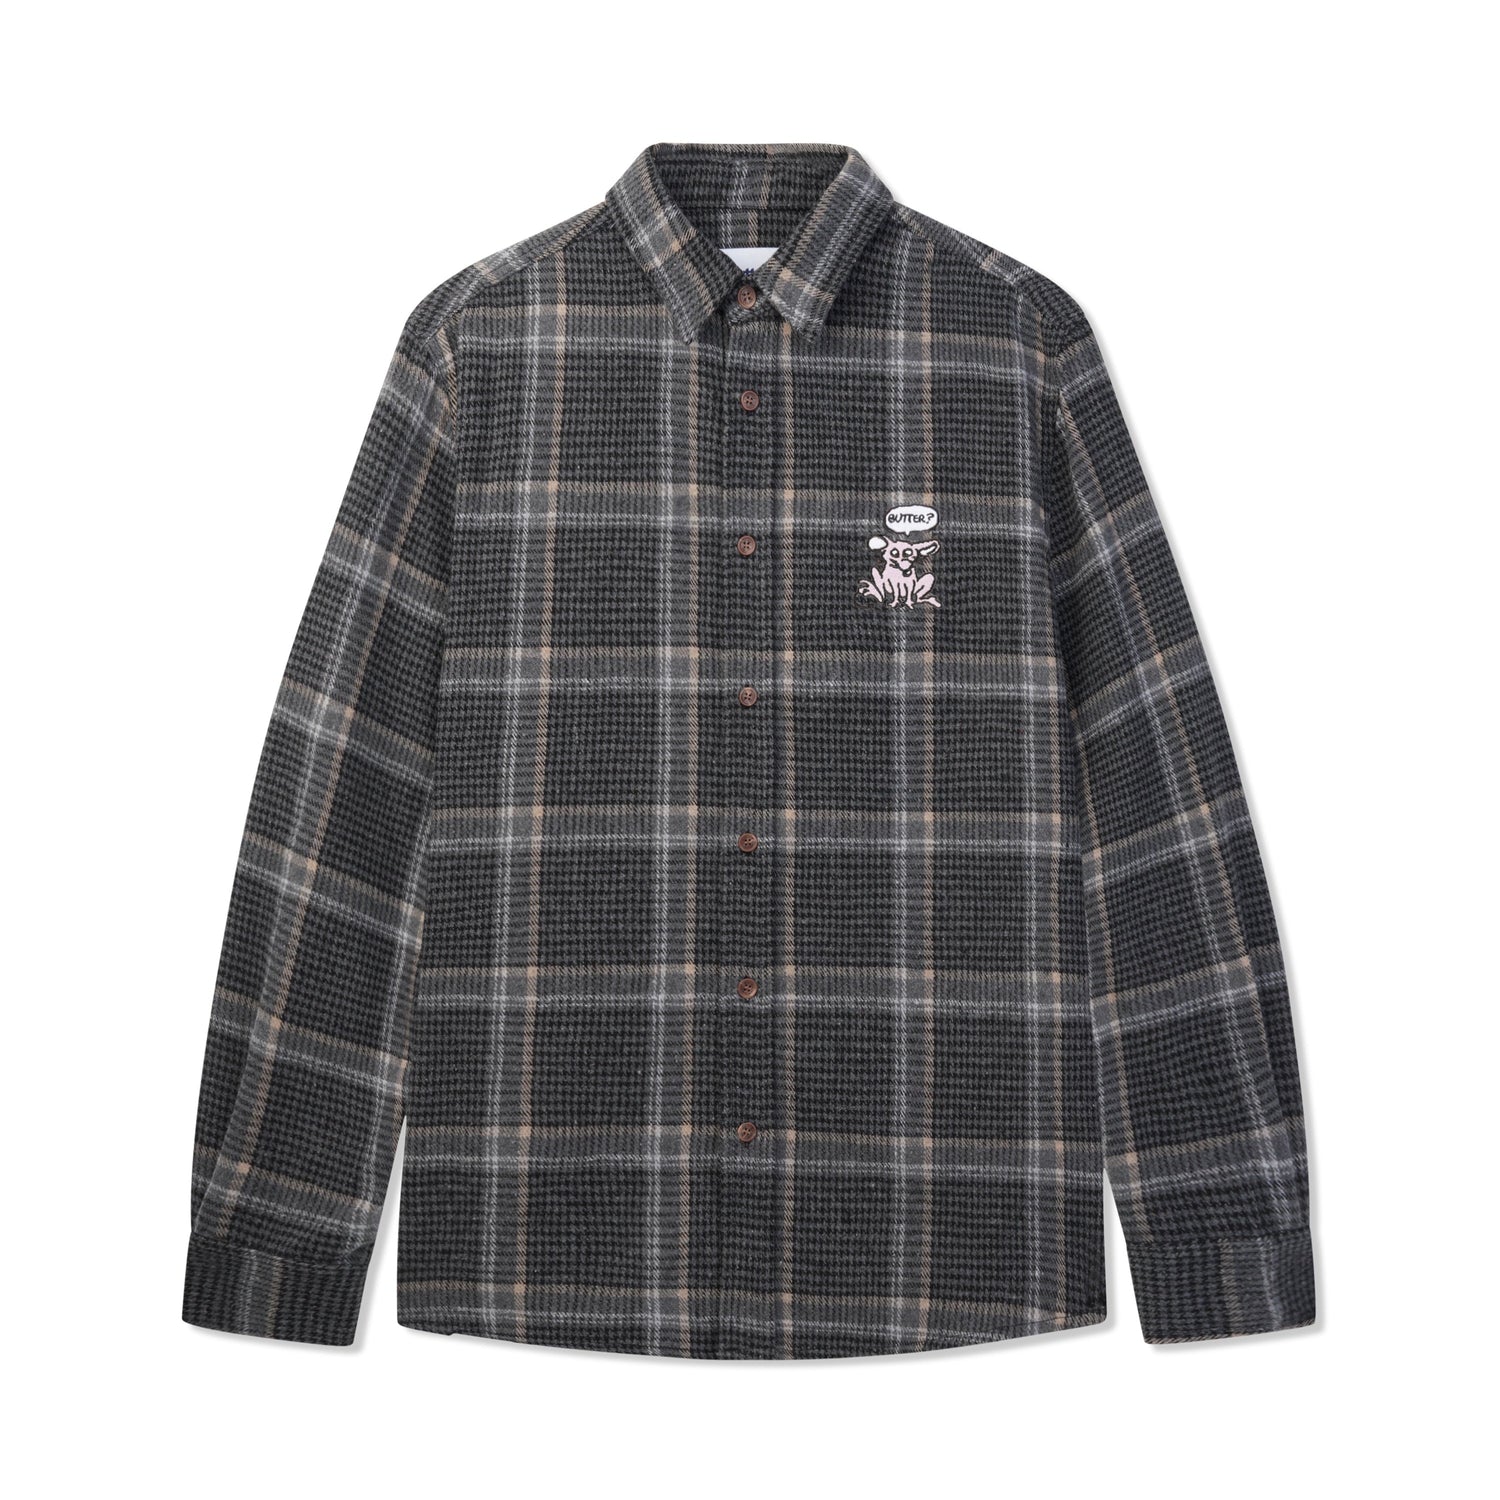 Rodent Flannel Shirt, Black / Grey